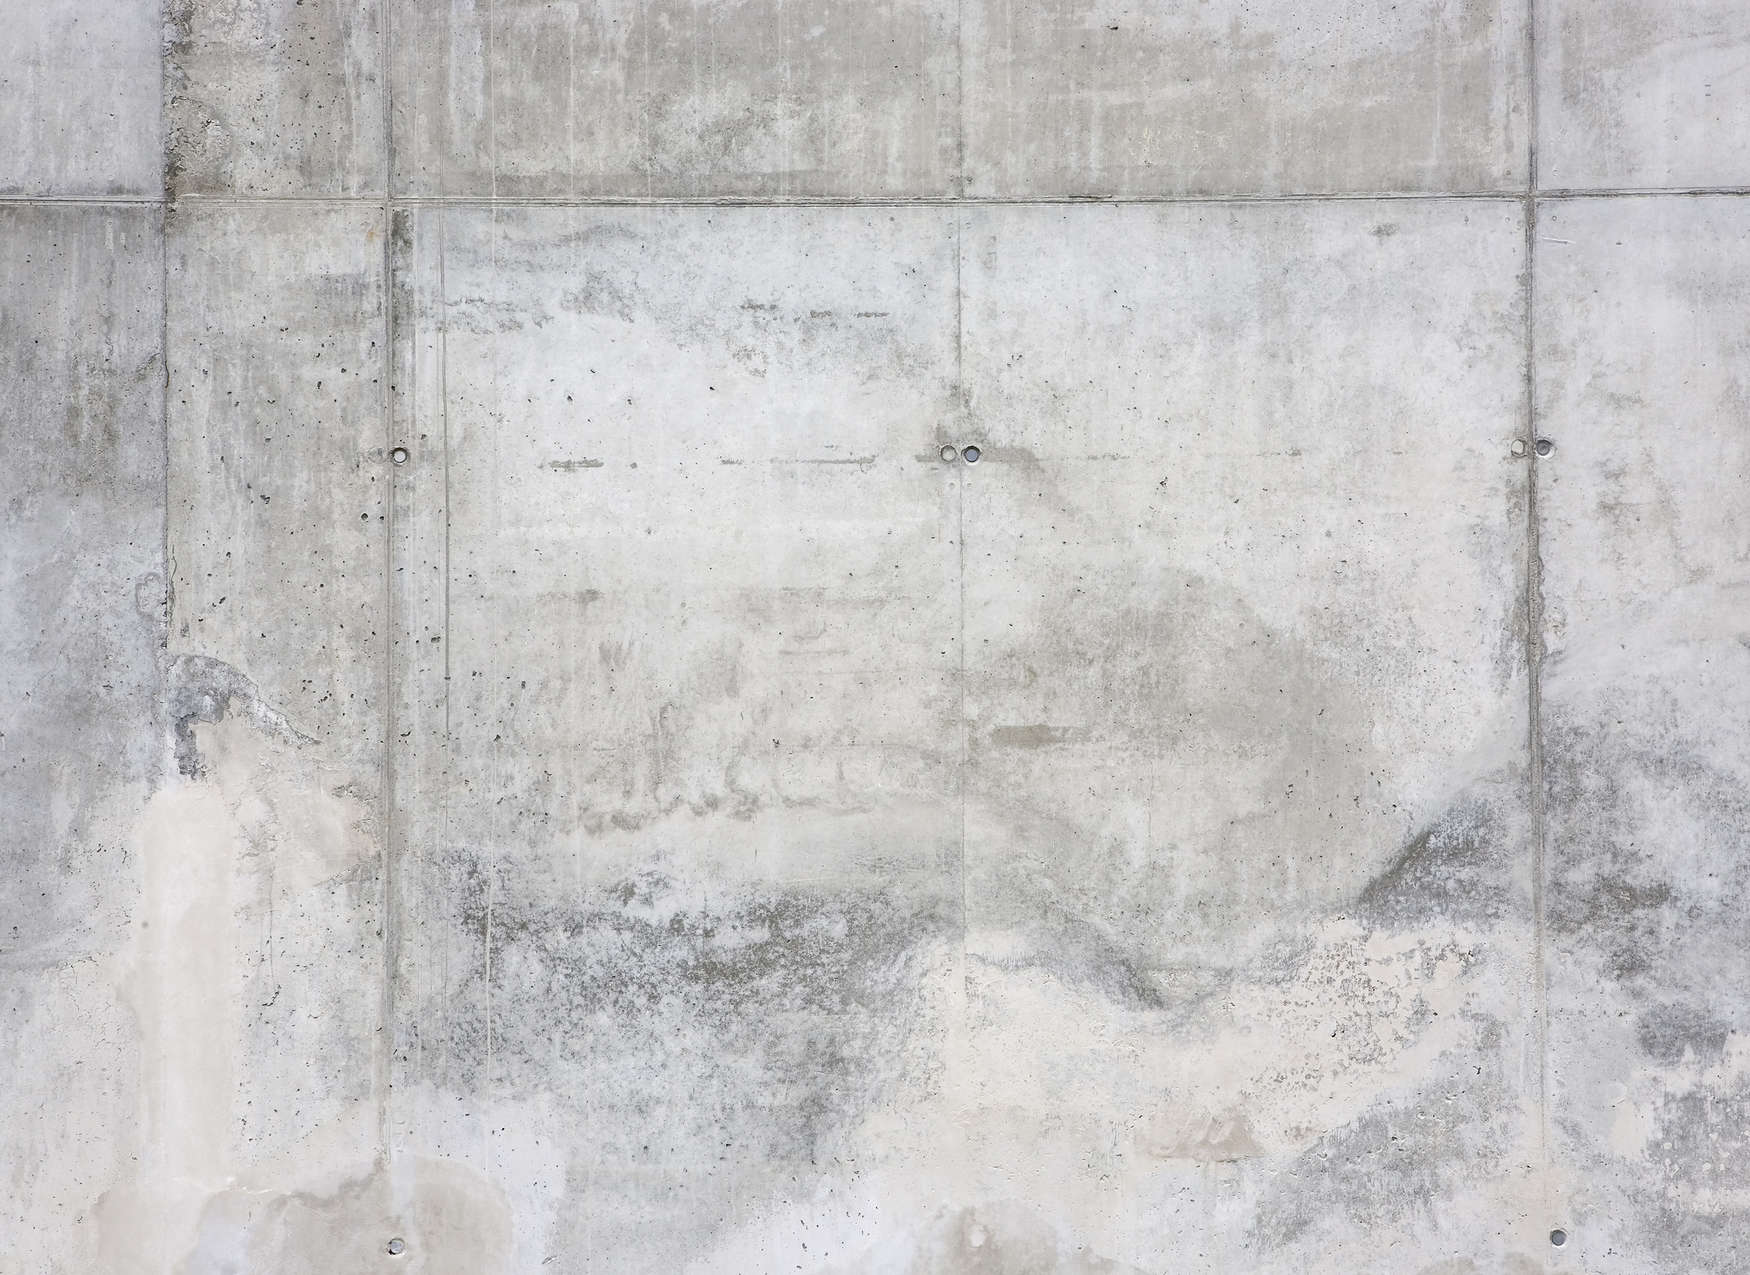             Vintage Concrete Wall Wallpaper with 3D Optics - Grey, White
        